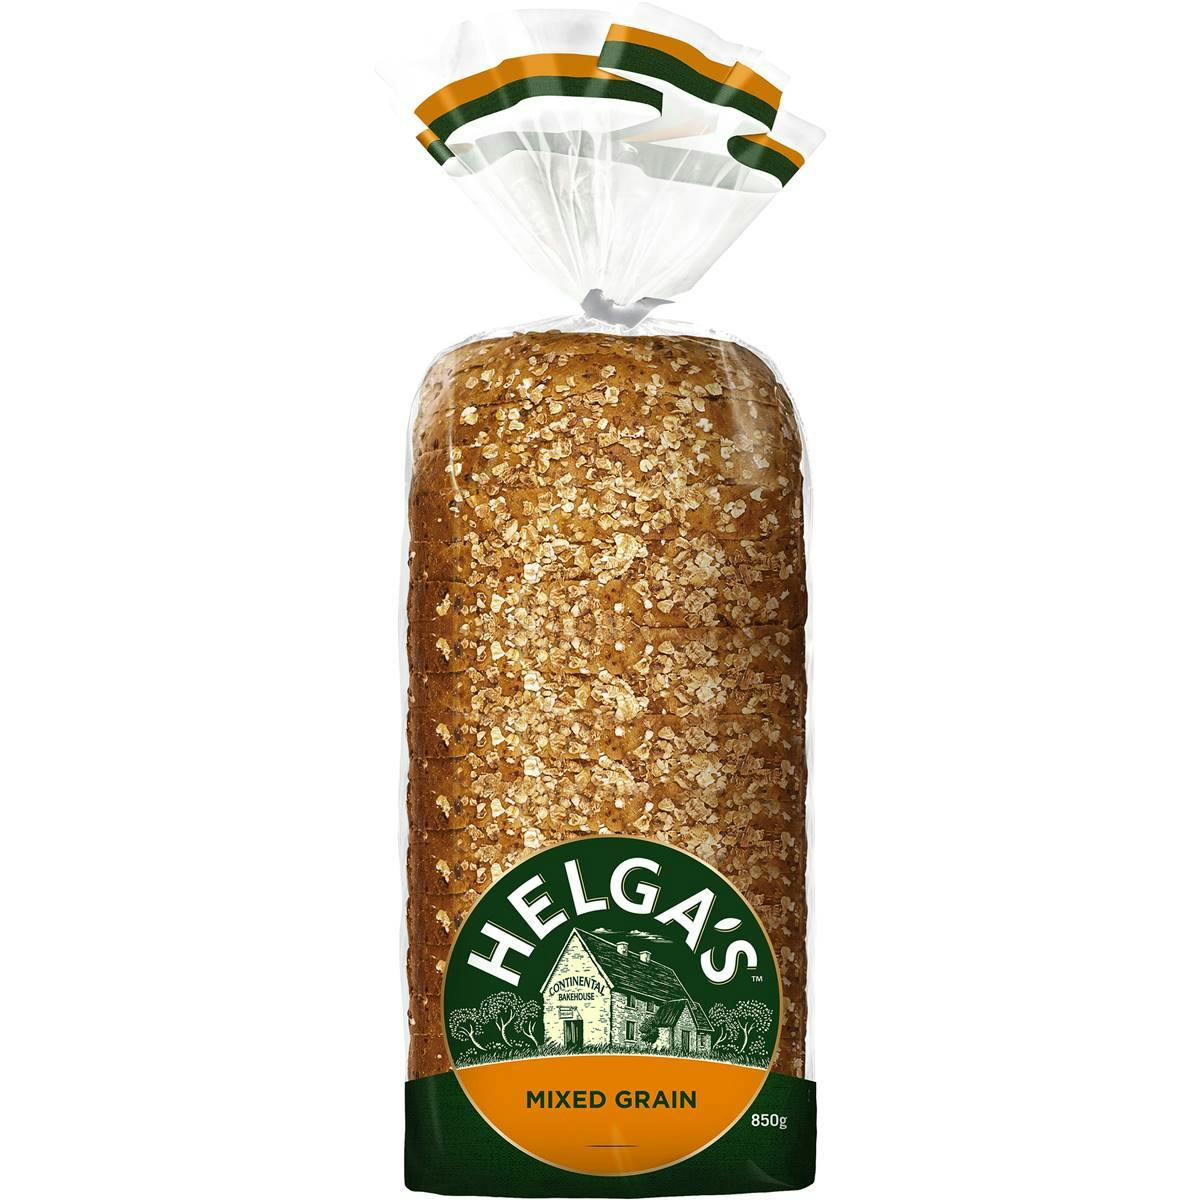 Helga's Grain Bread Mixed Grain